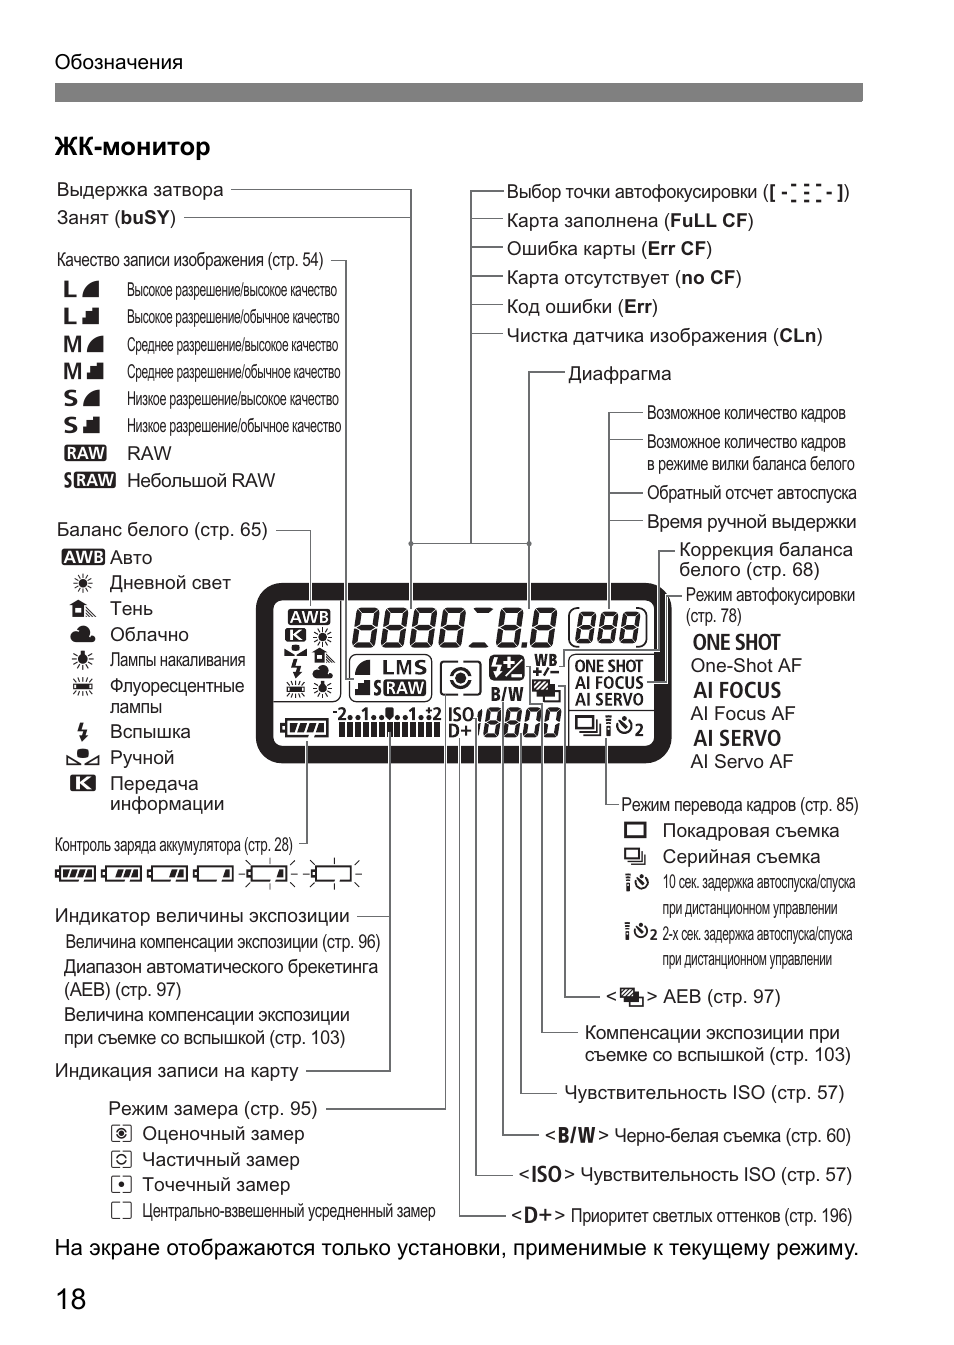 Жк-монитор | Инструкция по эксплуатации Canon EOS-1Ds Mark II | Страница 18 / 252